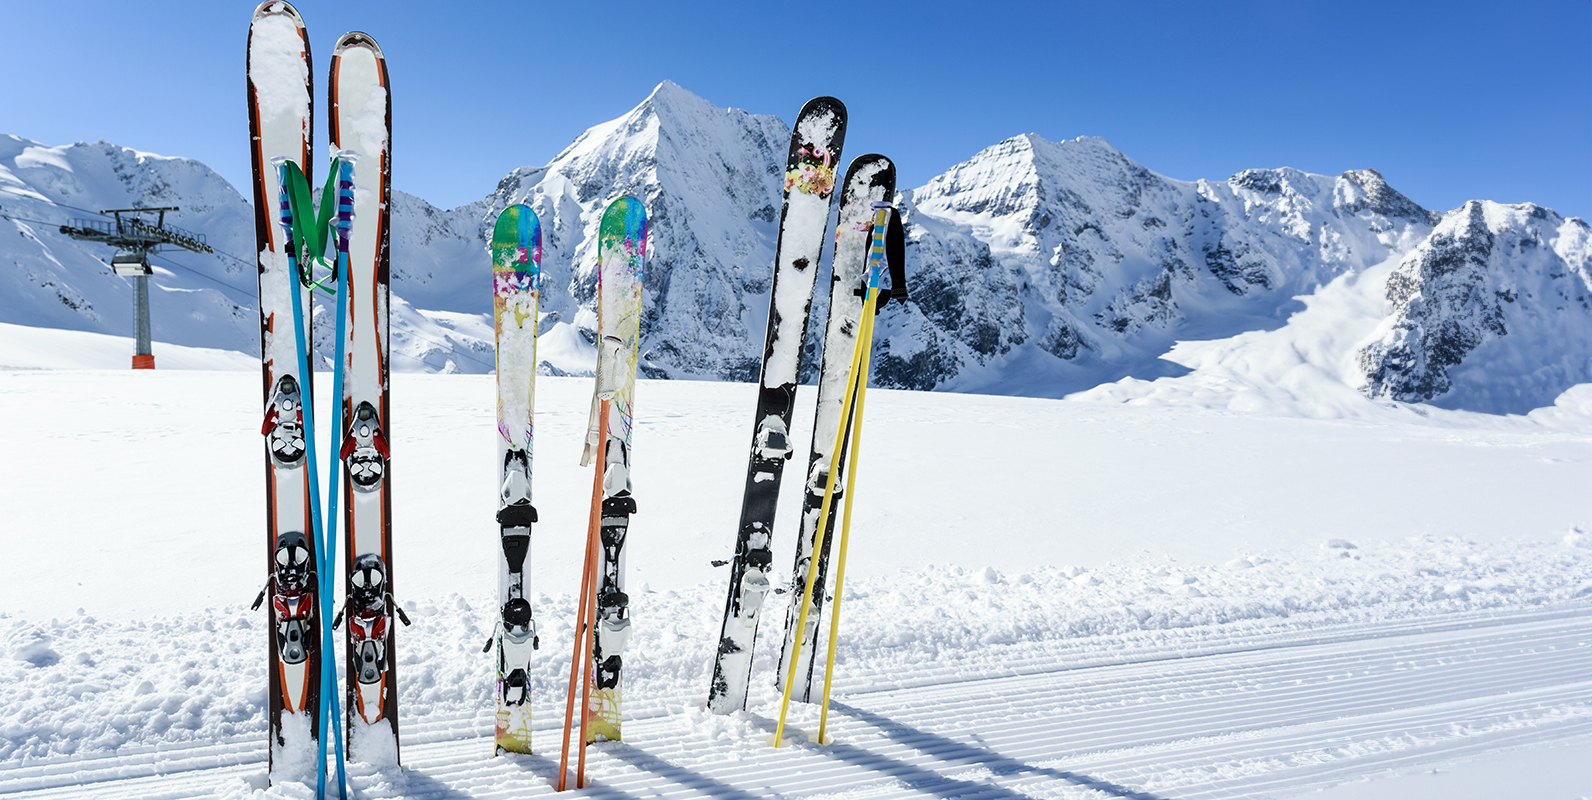 2-inside-Snowboard-or-alpine-skiing-1592-800.jpg